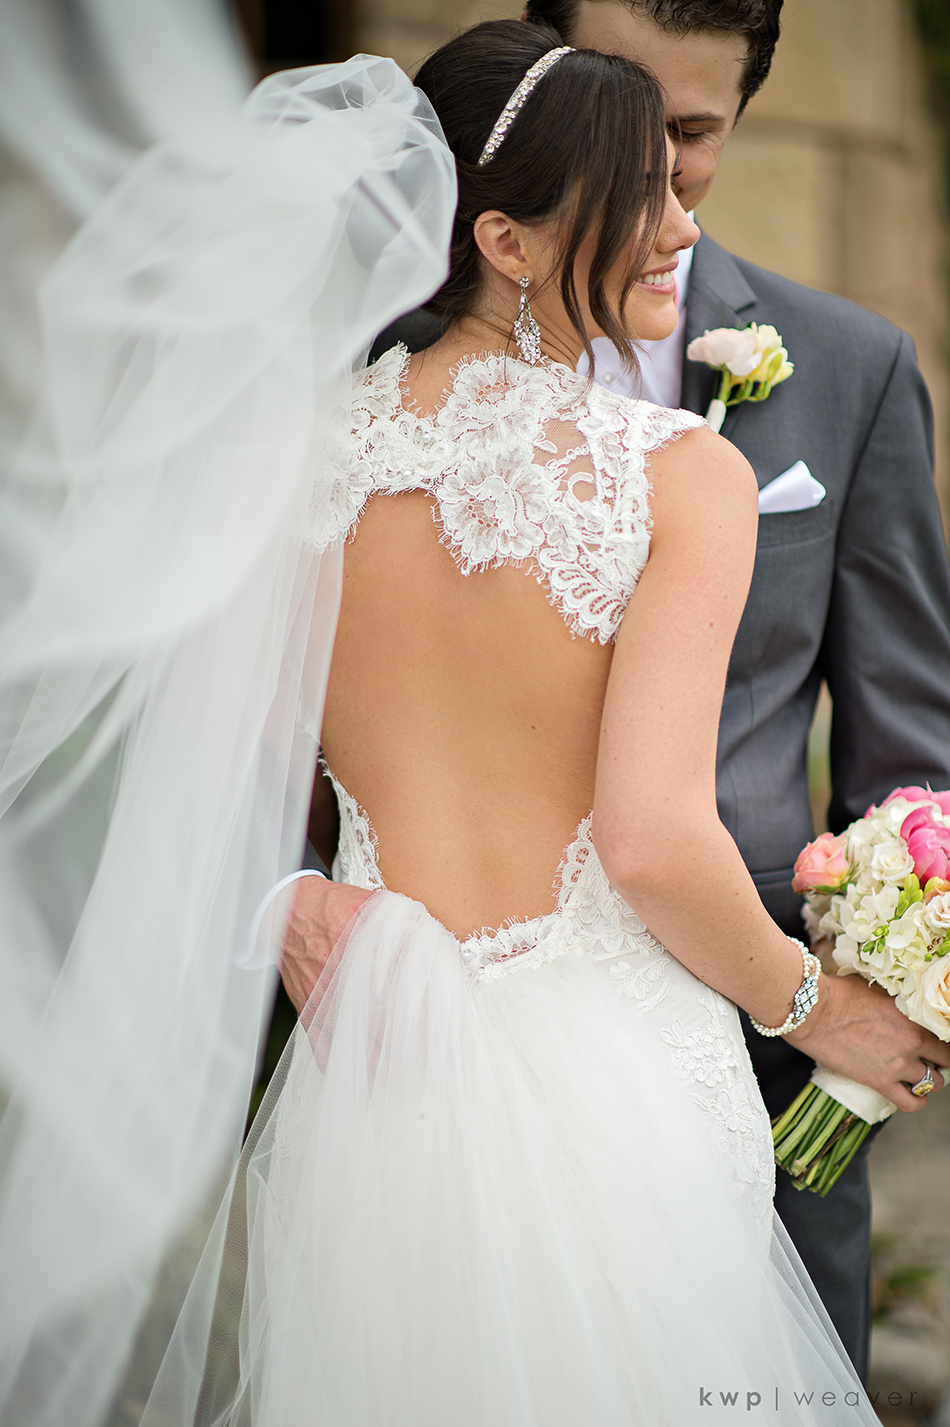 Lace detail wedding dress